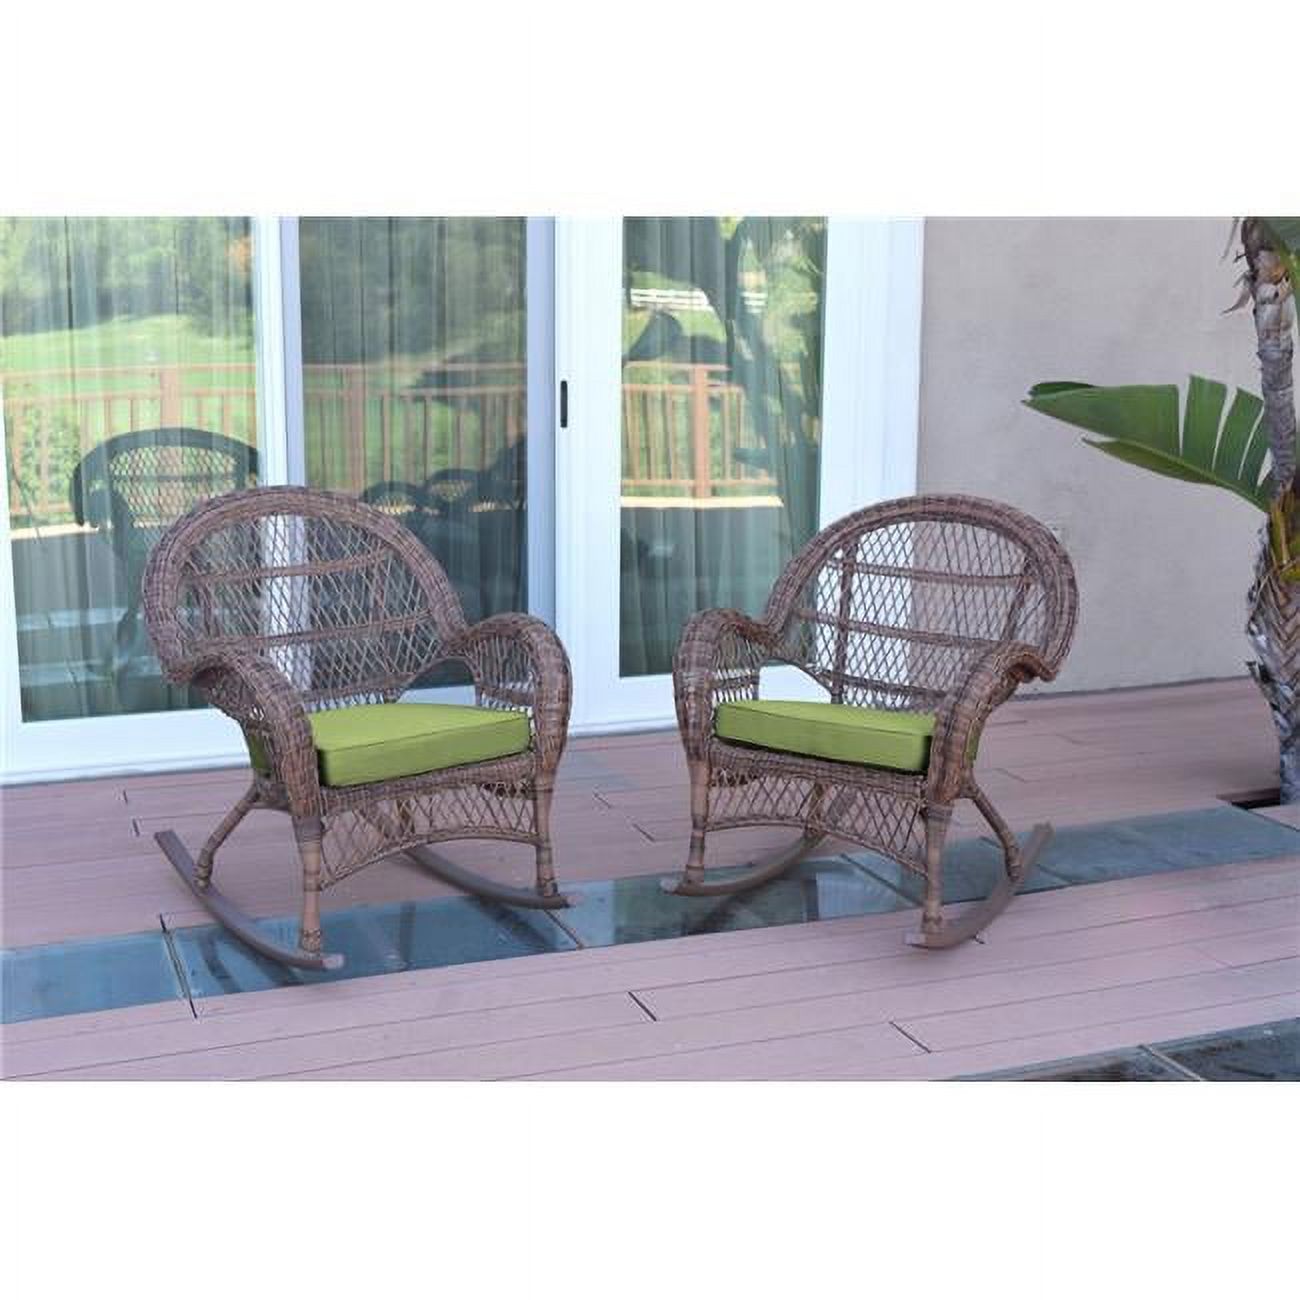 W00210-R-2-FS029 Santa Maria Honey Wicker Rocker Chair with Green Cushion - Set of 2 - image 1 of 1